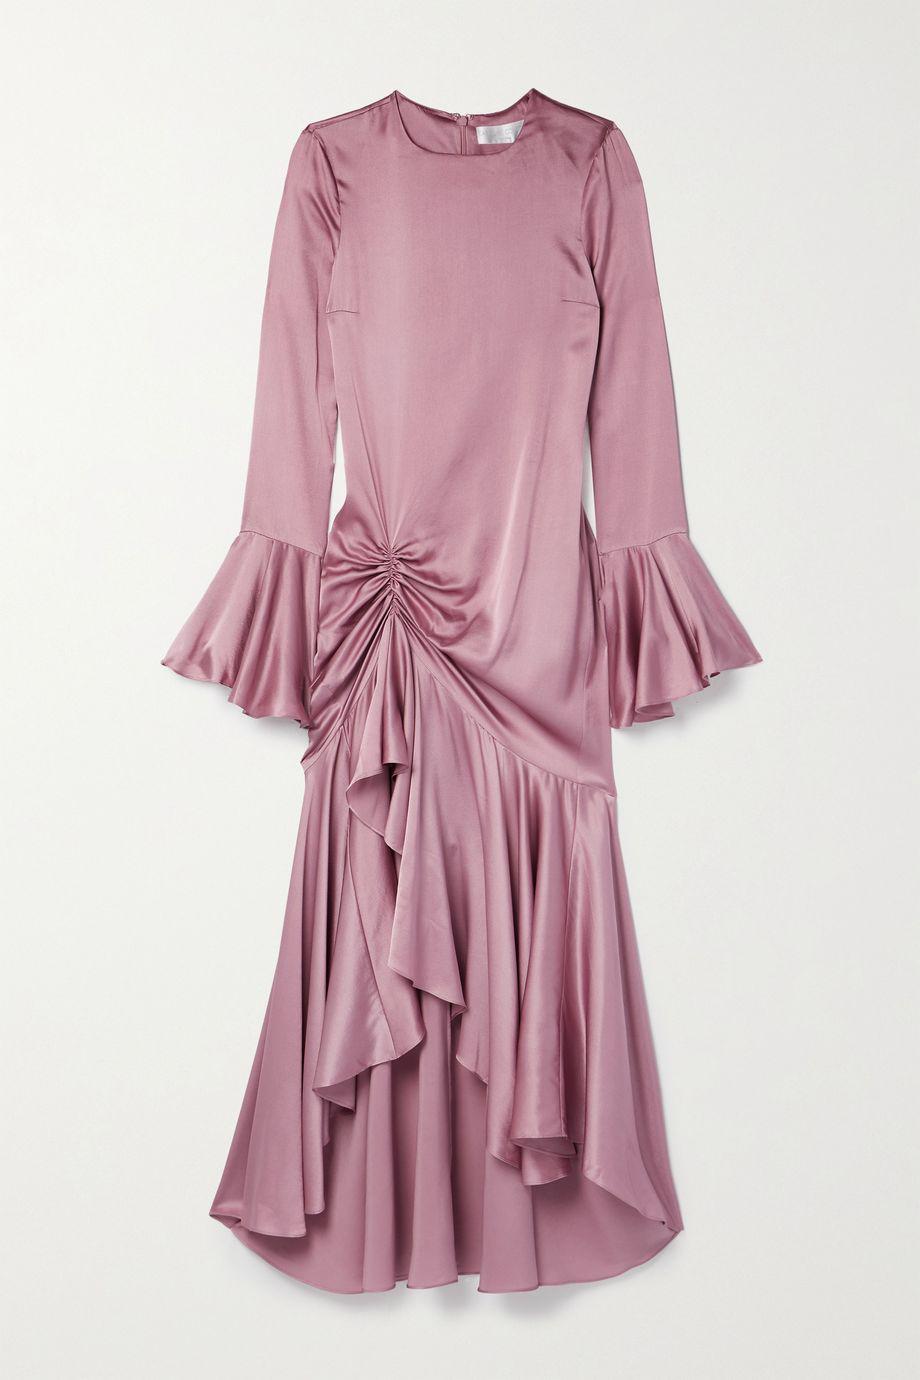 Monique draped stretch-silk charmeuse midi dress by CAROLINE CONSTAS